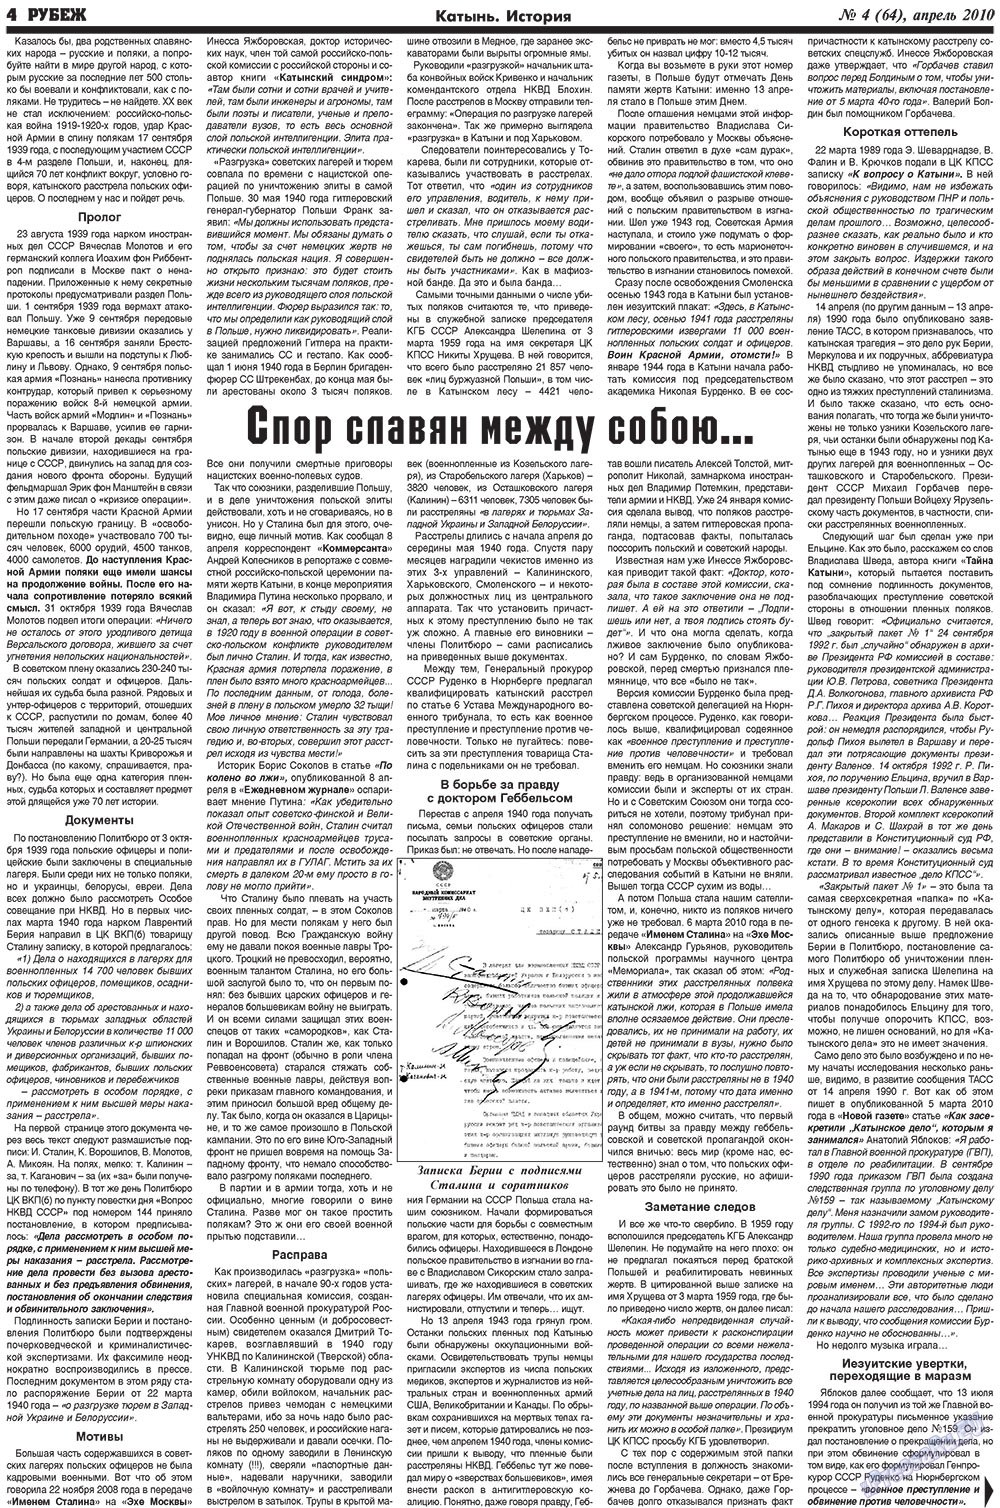 Рубеж, газета. 2010 №4 стр.4